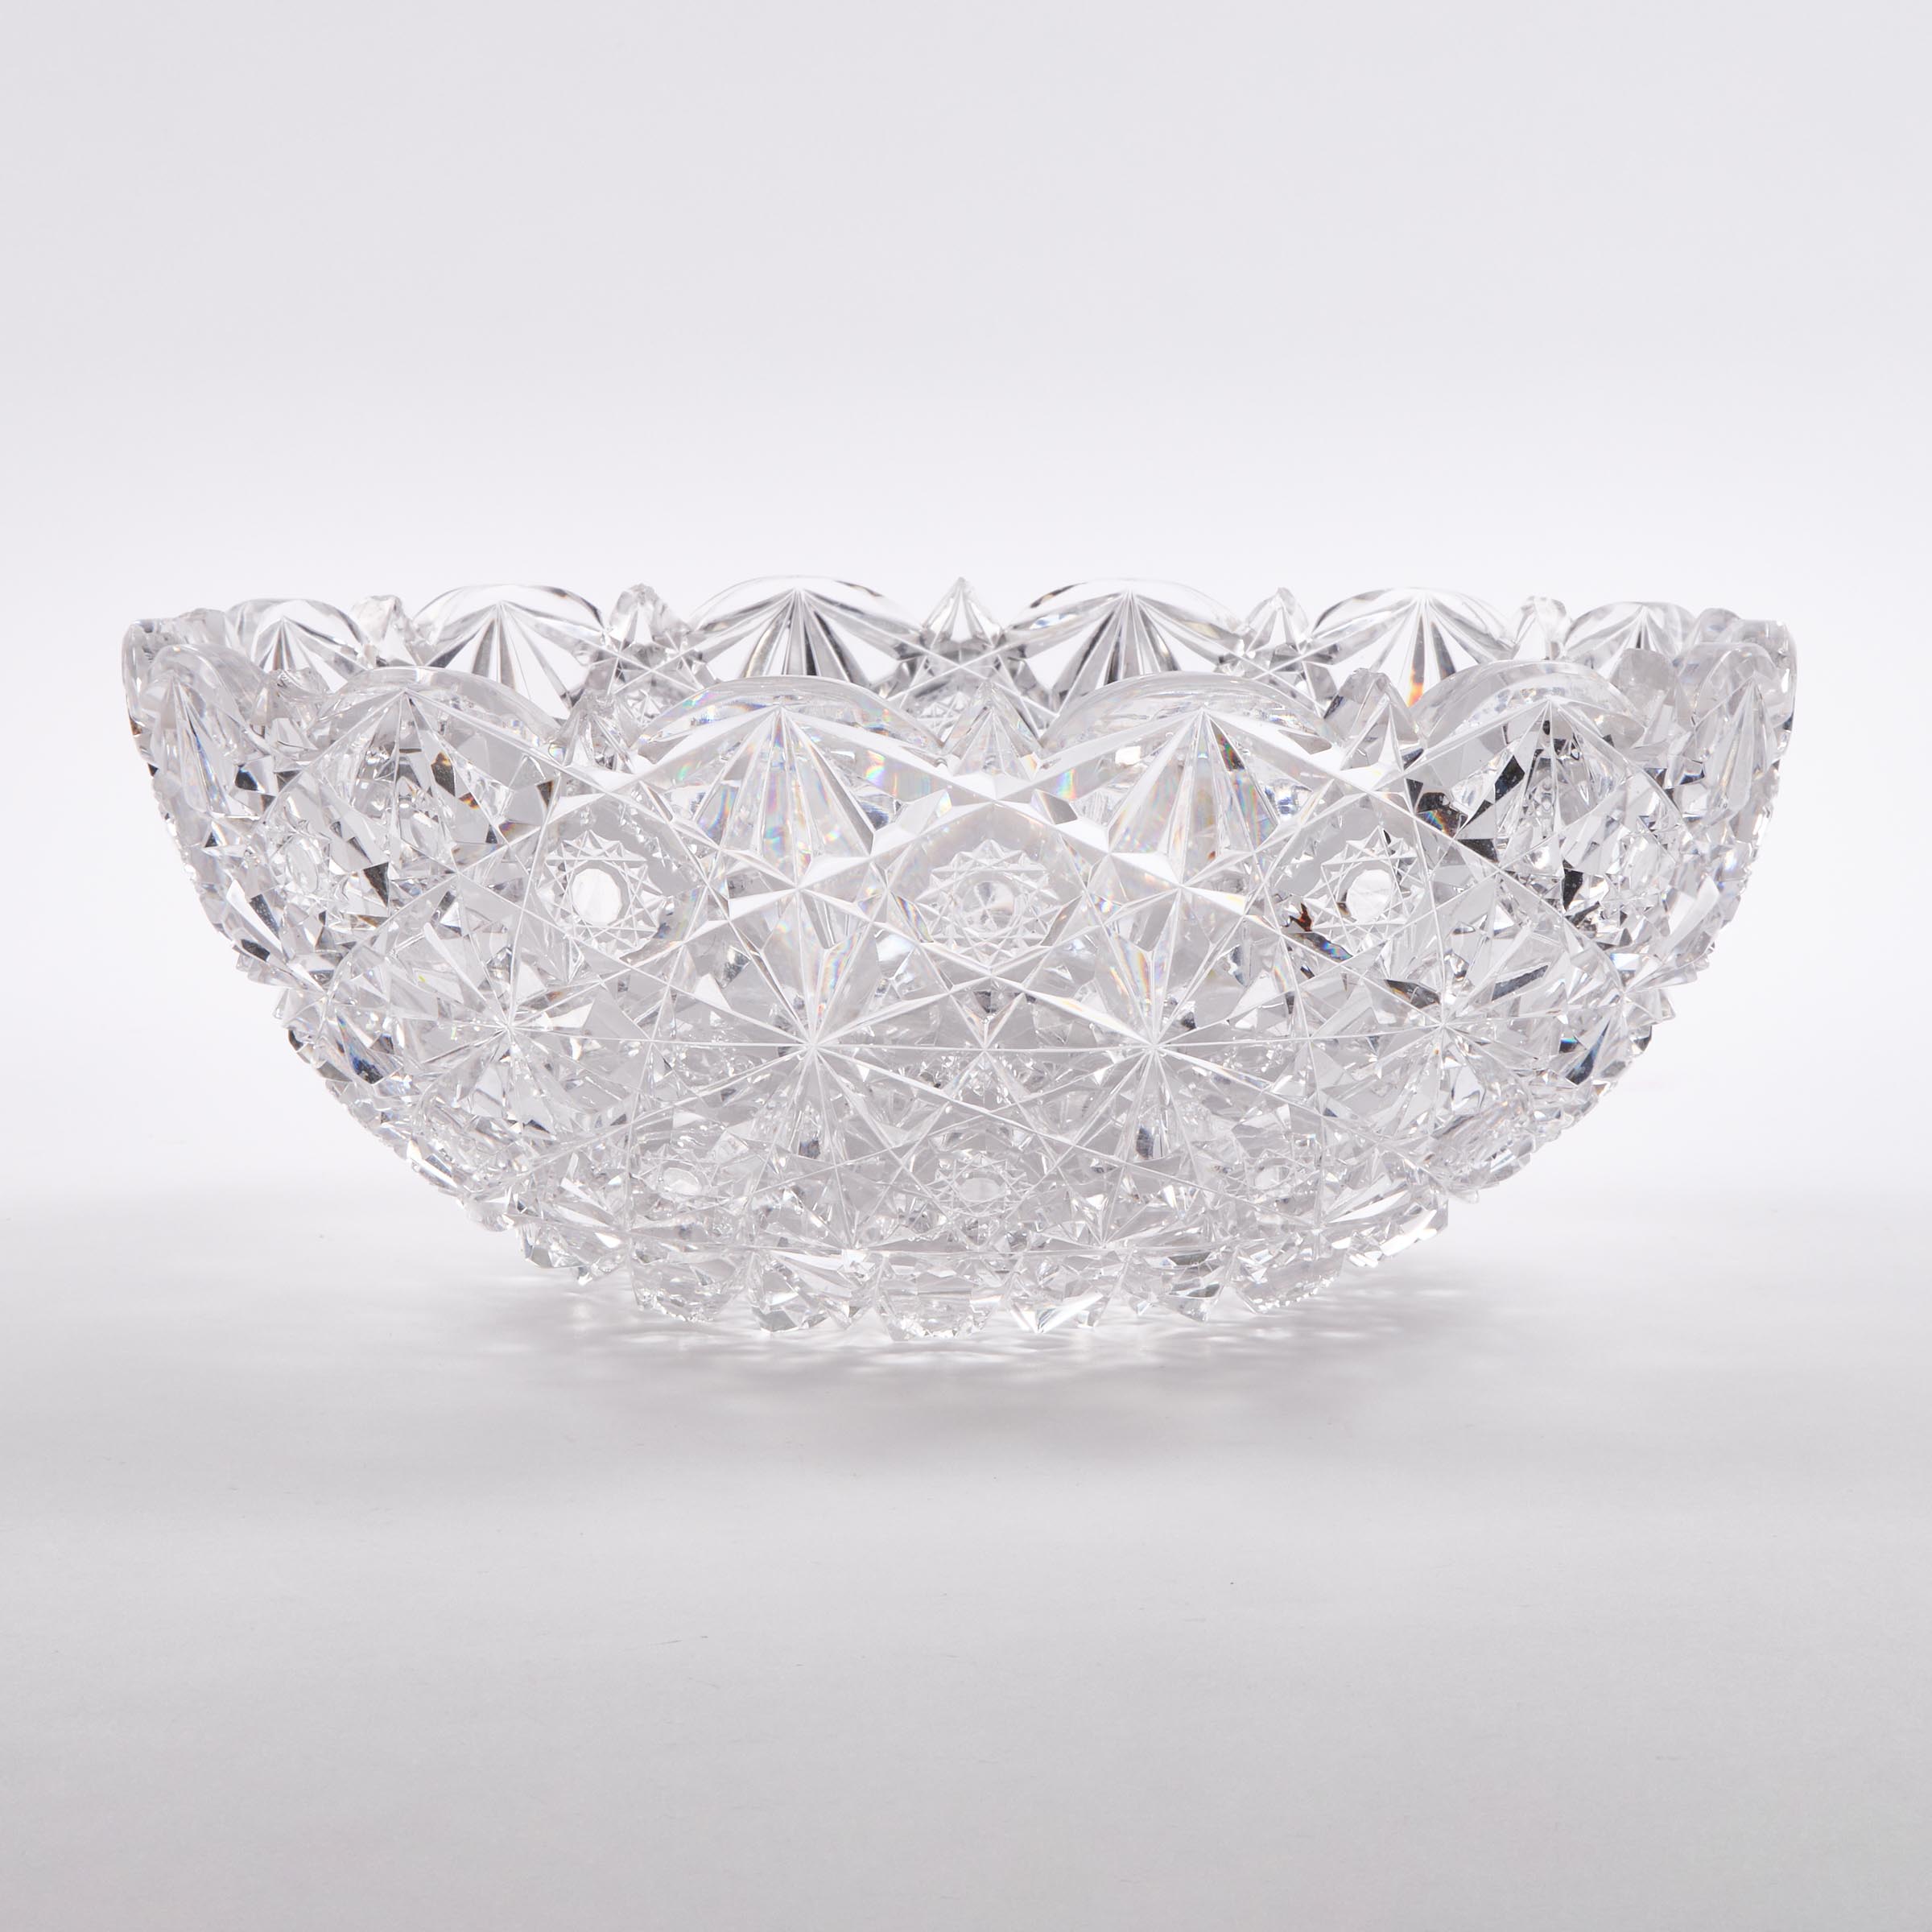 North American Cut Glass Bowl,